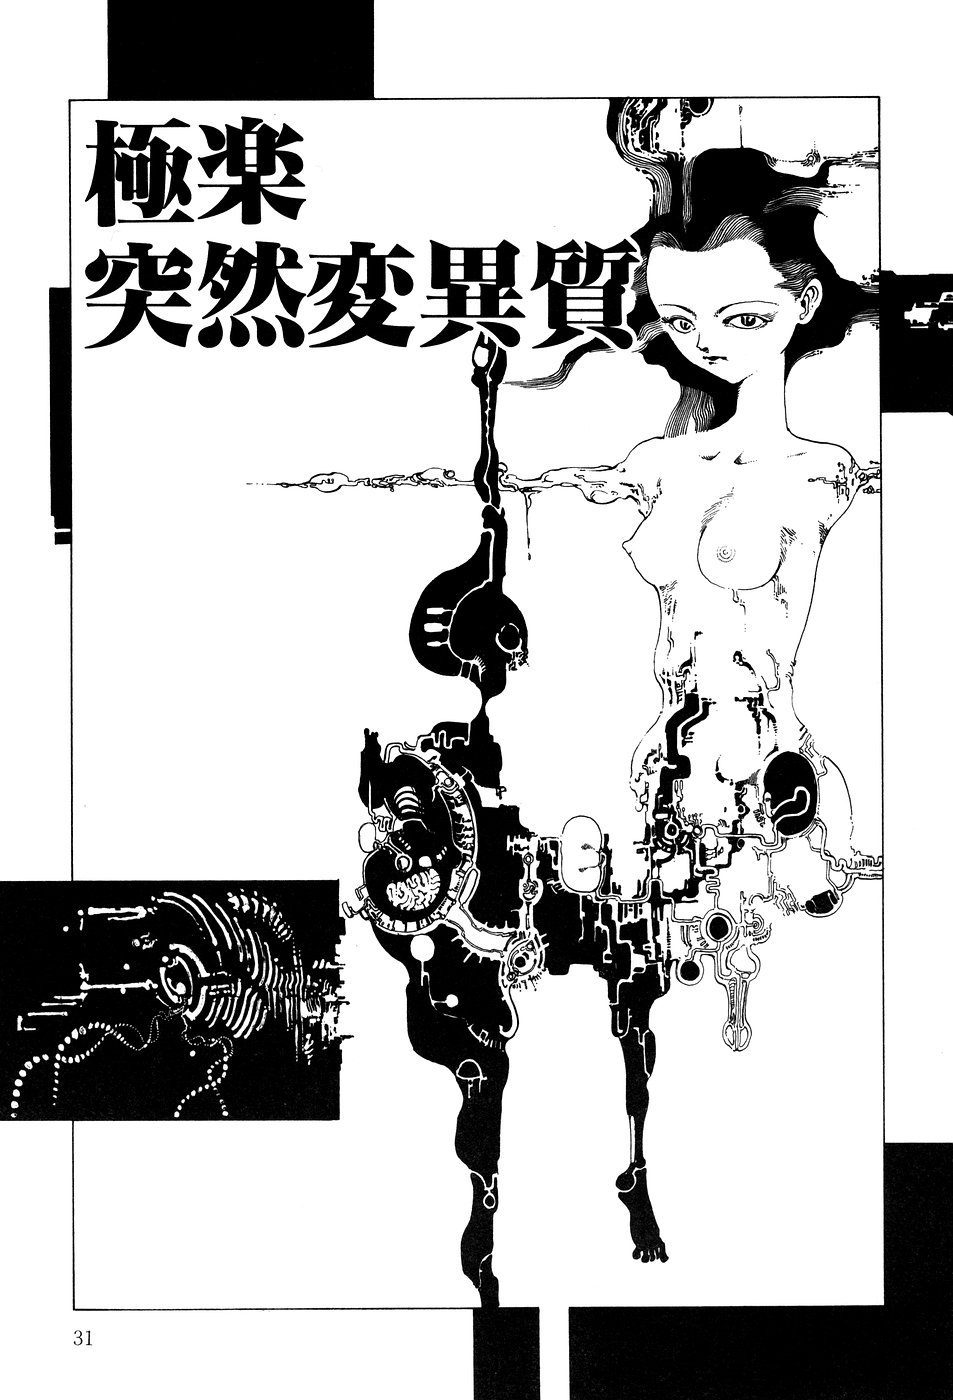 [Shintaro Kago] Dekoboko Nymphomania (1995) [駕籠真太郎] 凸凹ニンフォマニア